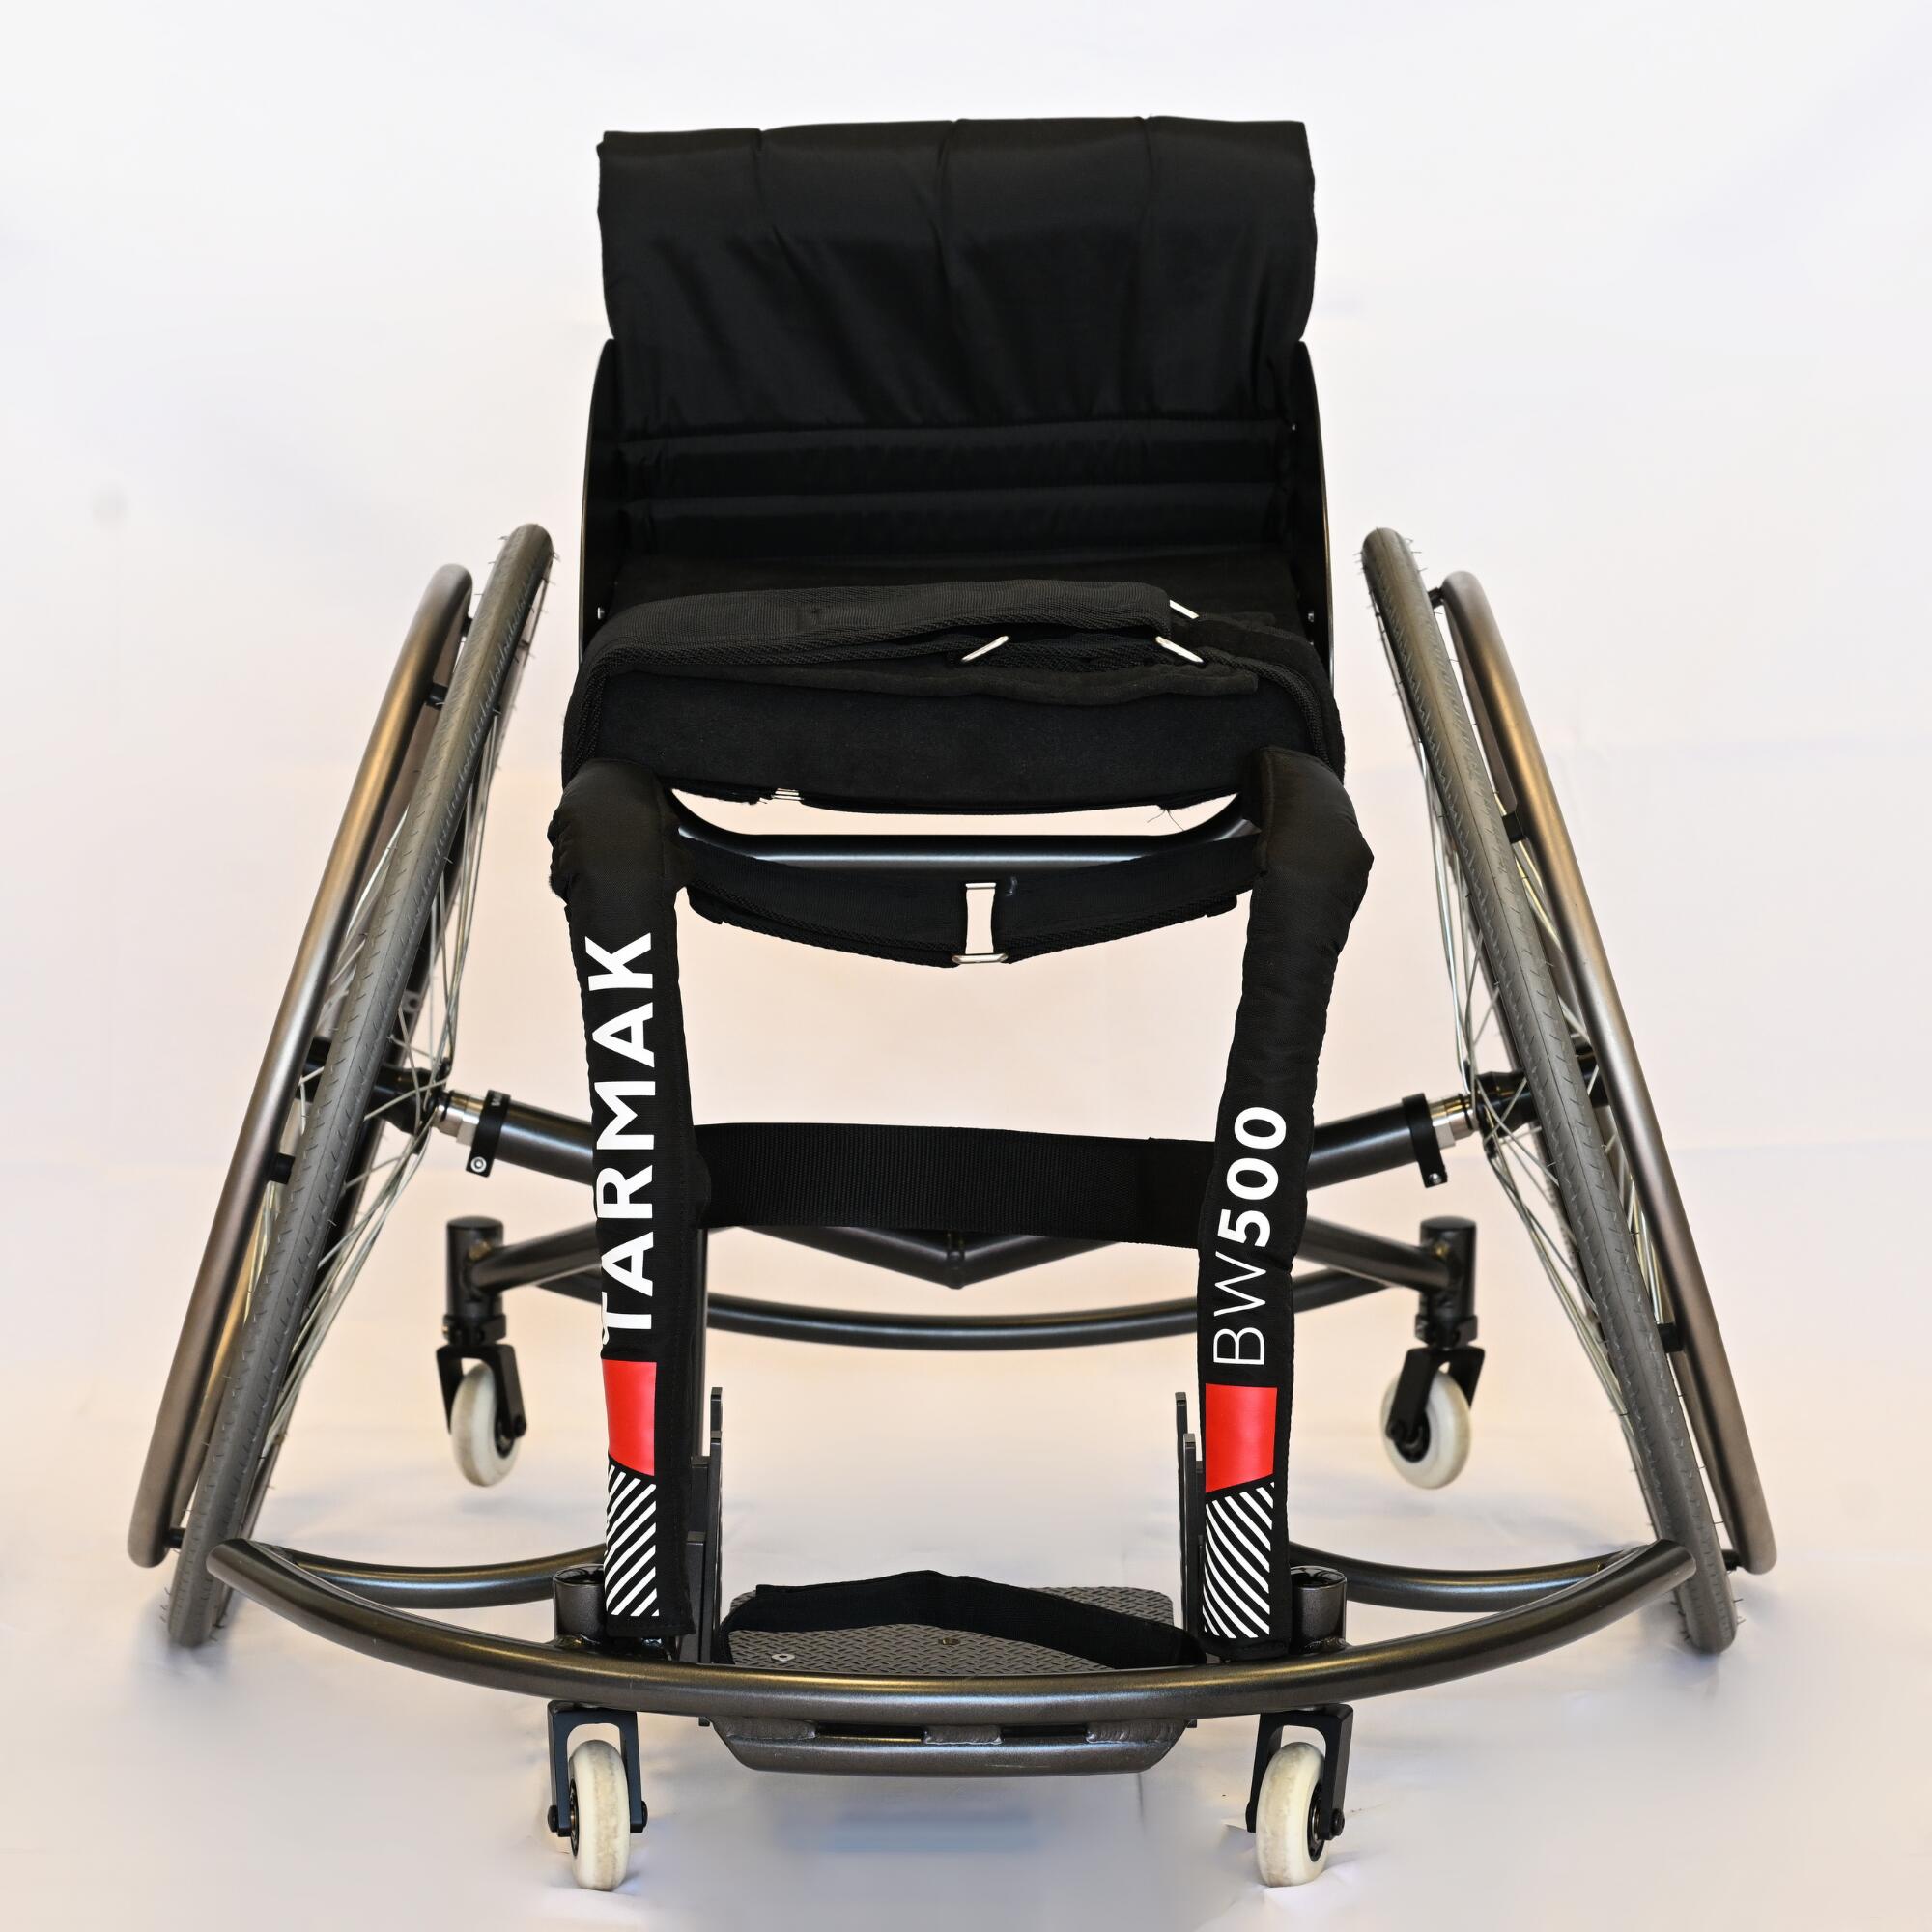 DECATHLON Adjustable Basketball Wheelchair BW500 - 26"